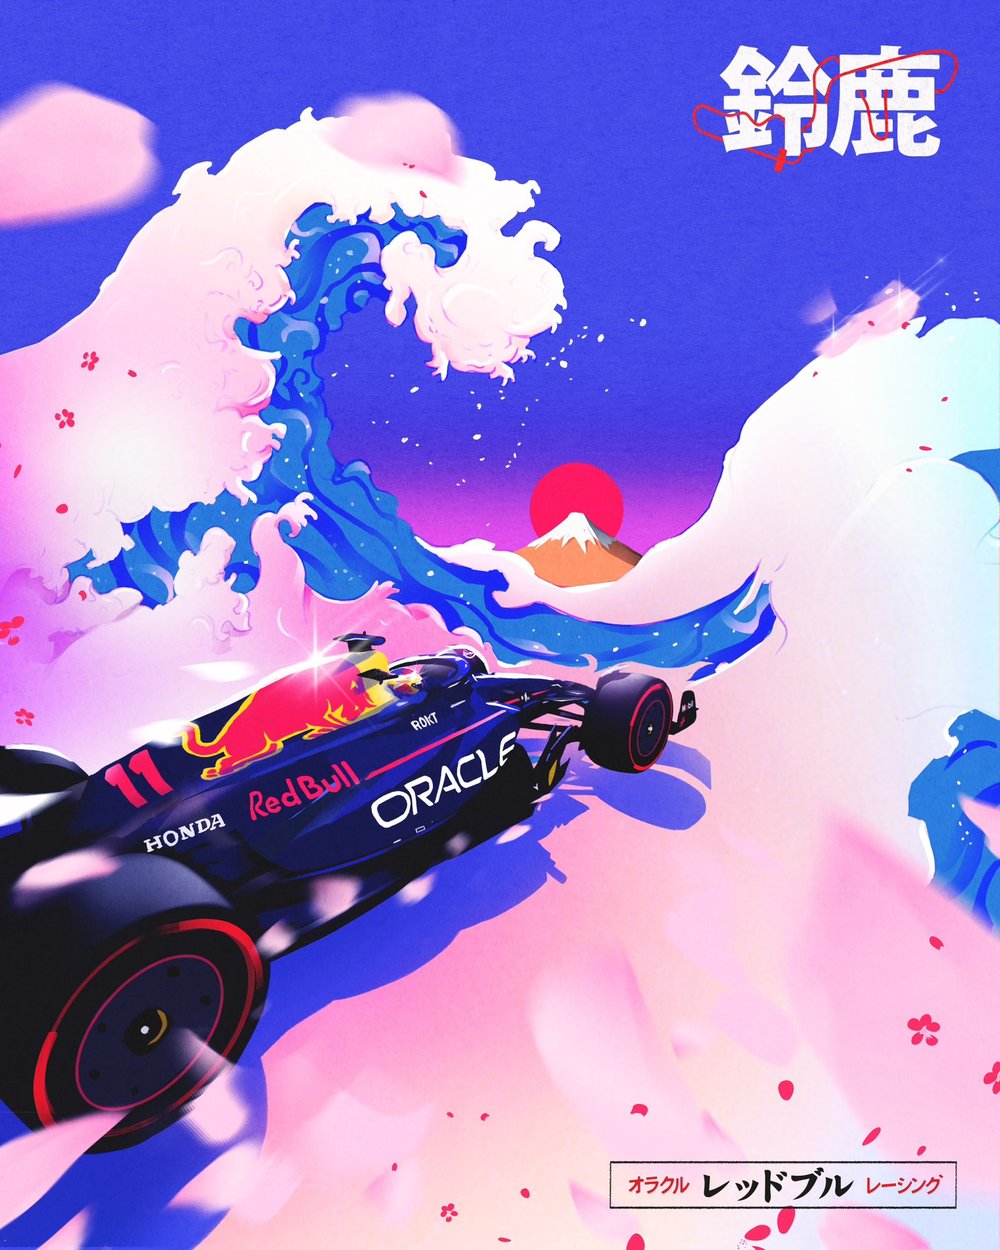 1 Red Bull Japan GP poster 1.jpg